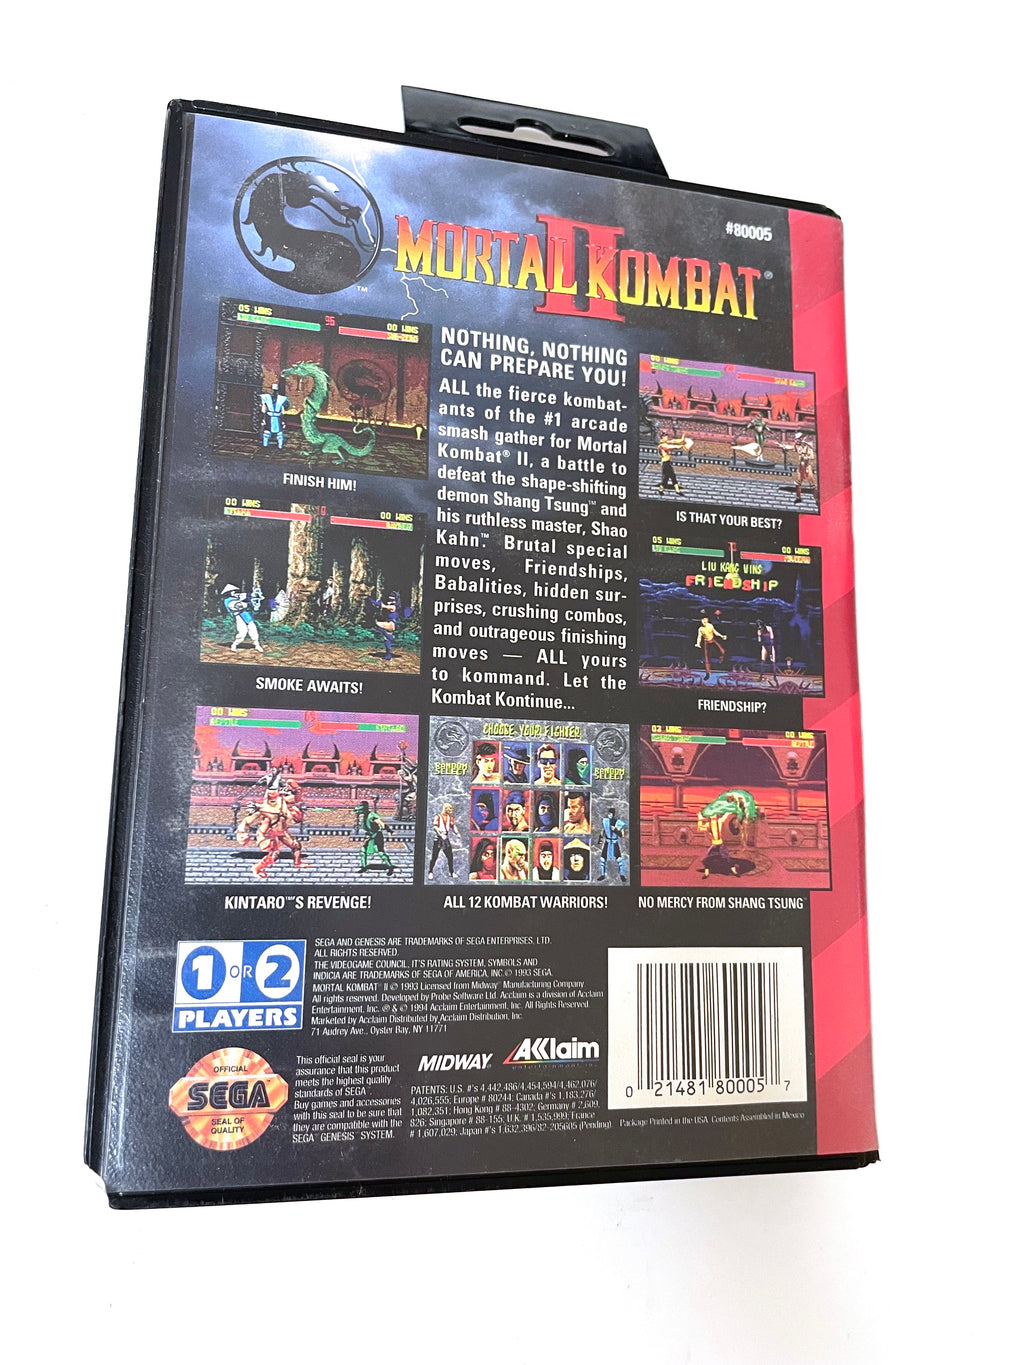 Play Mortal Kombat II for SEGA Genesis Online ~ OldGames.sk